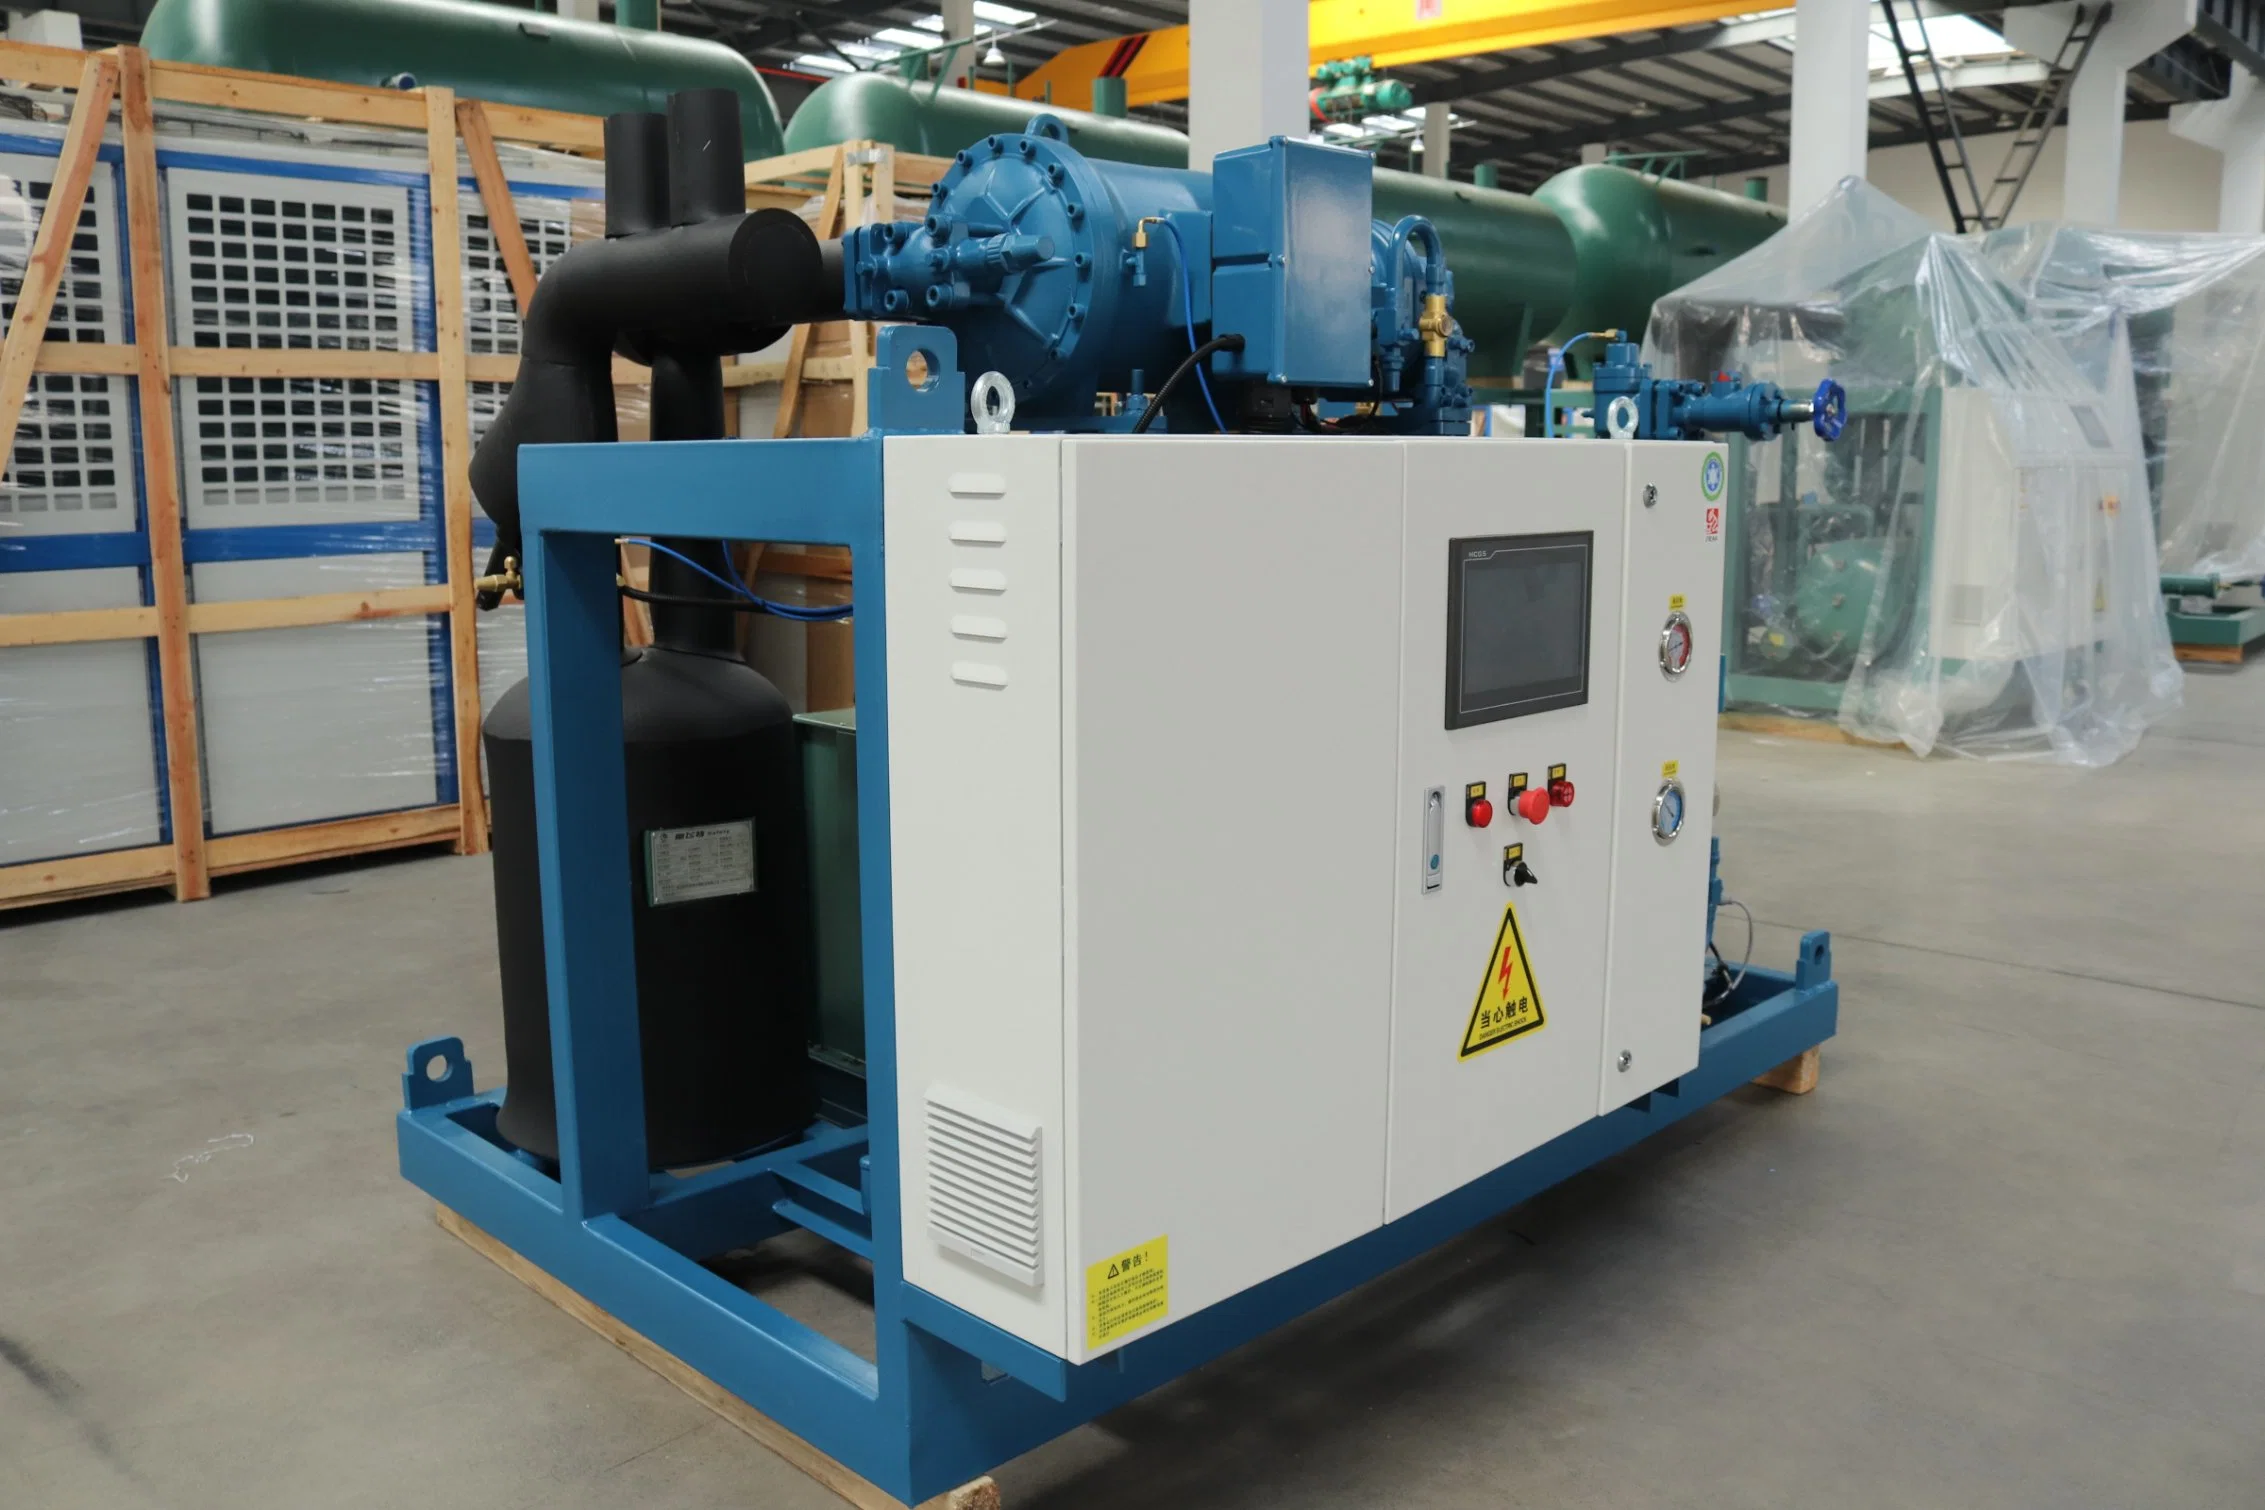 Frozen Sea Fise Cold Storage Refrigeration Equipment with 360HP Compressor Unit